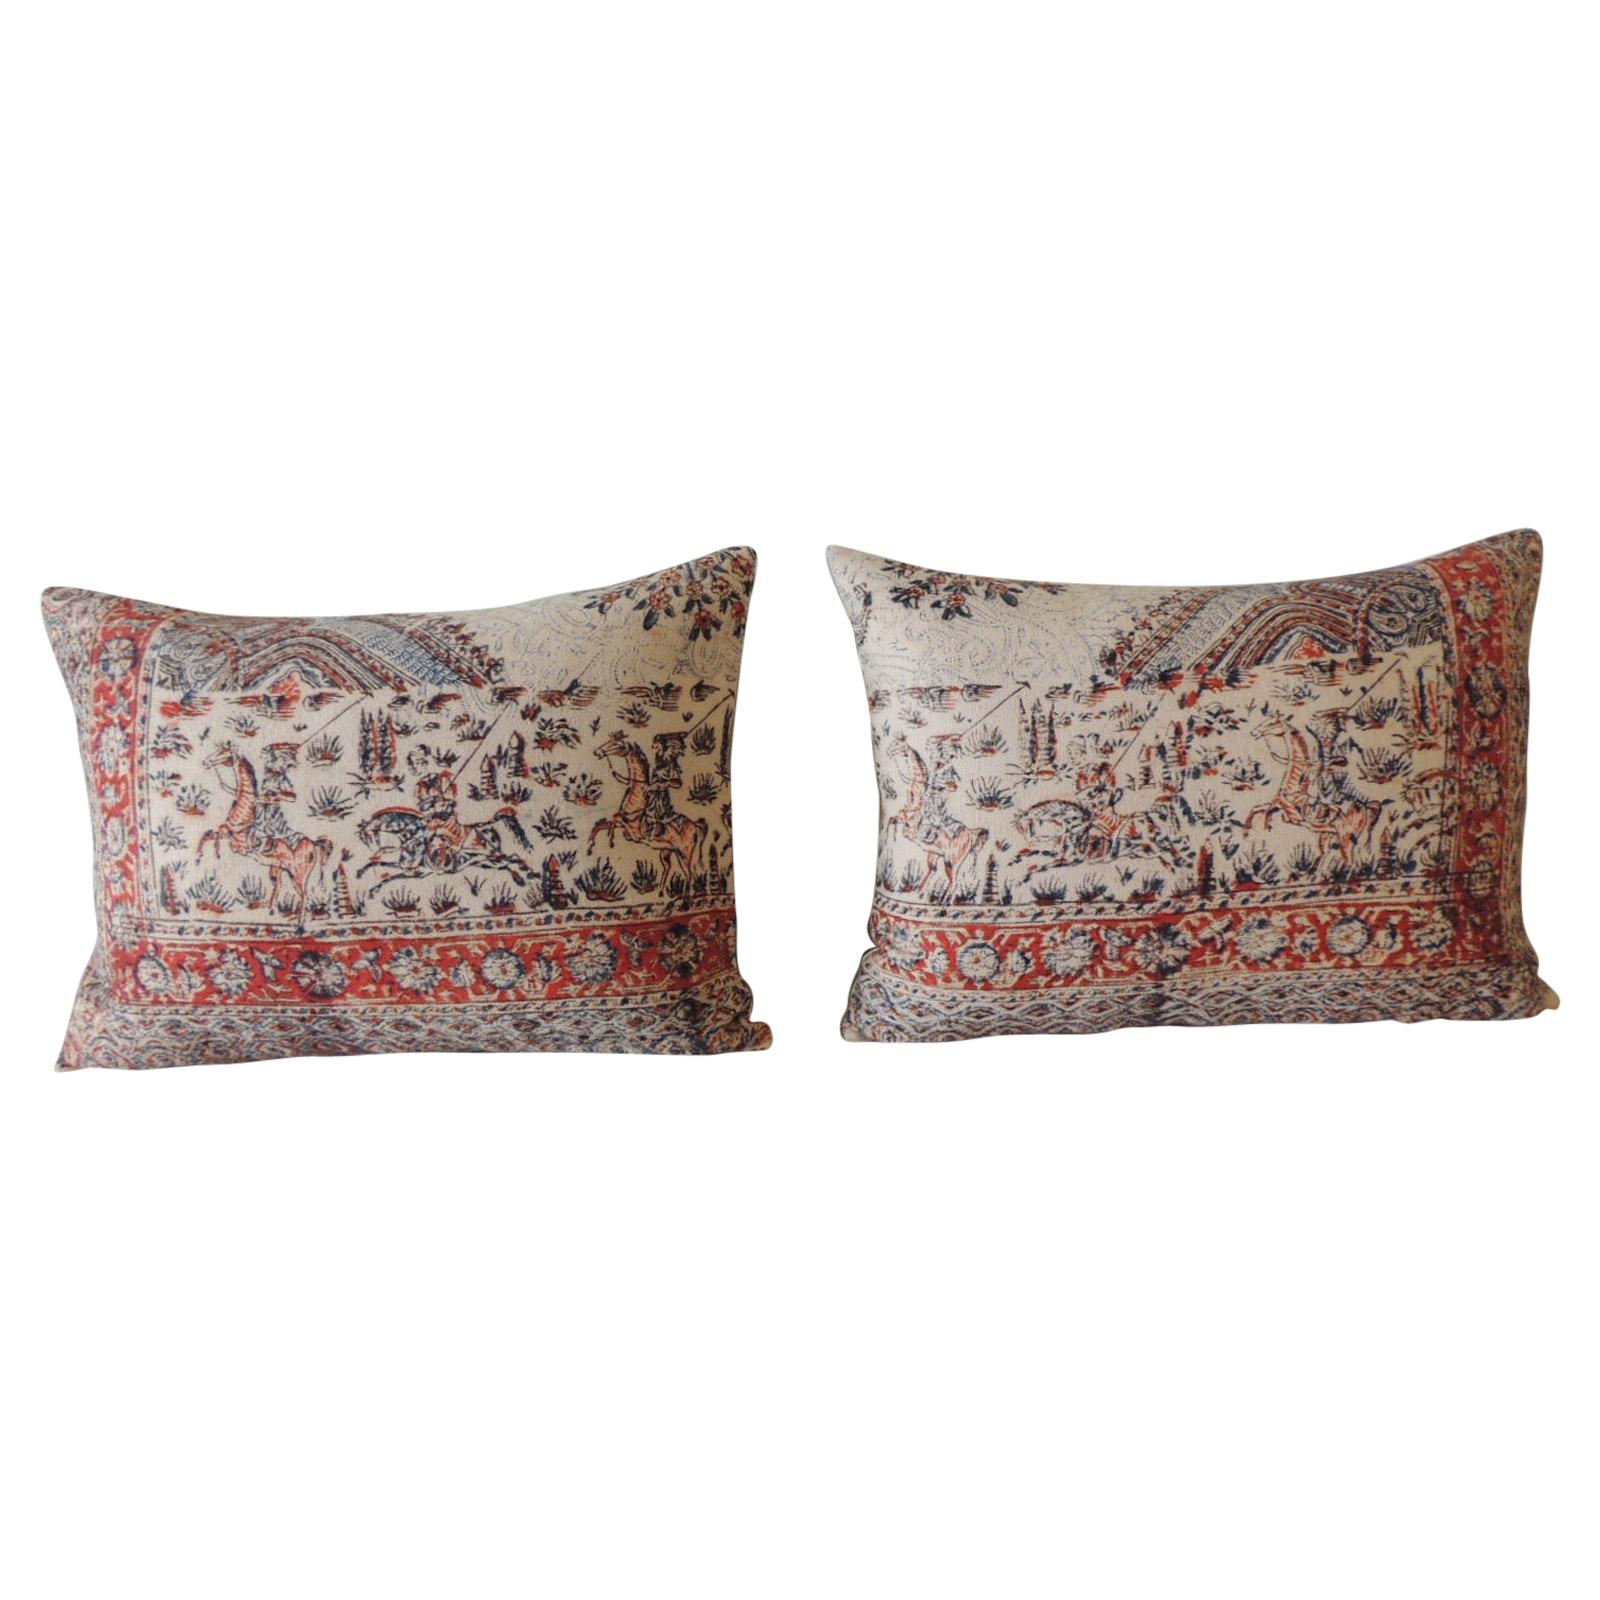 Pair of Vintage Hand-Blocked Kalamkari Bolster Decorative Pillows